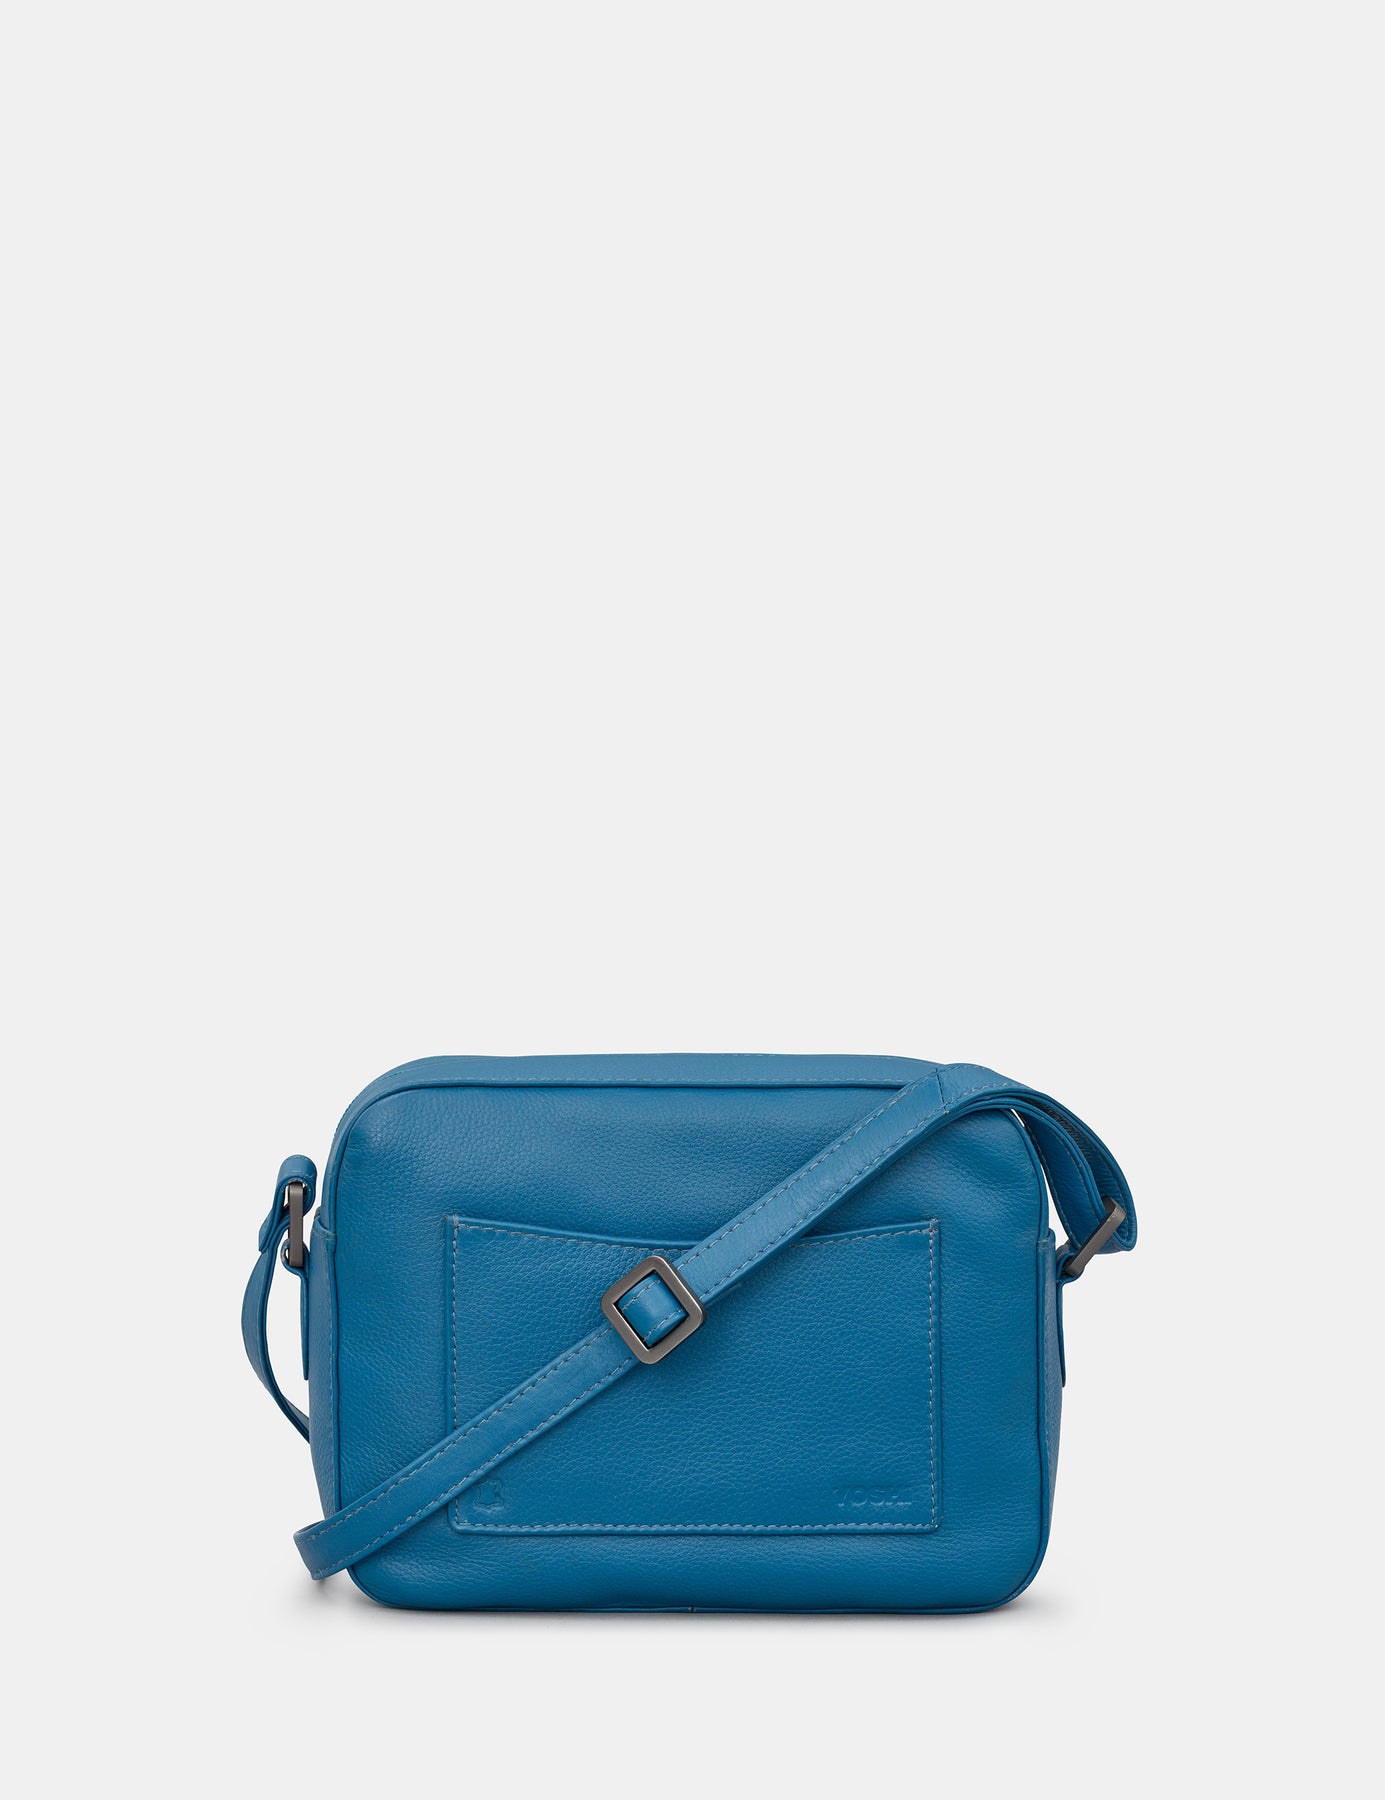 Blue Leather Crossbody Camera Bag